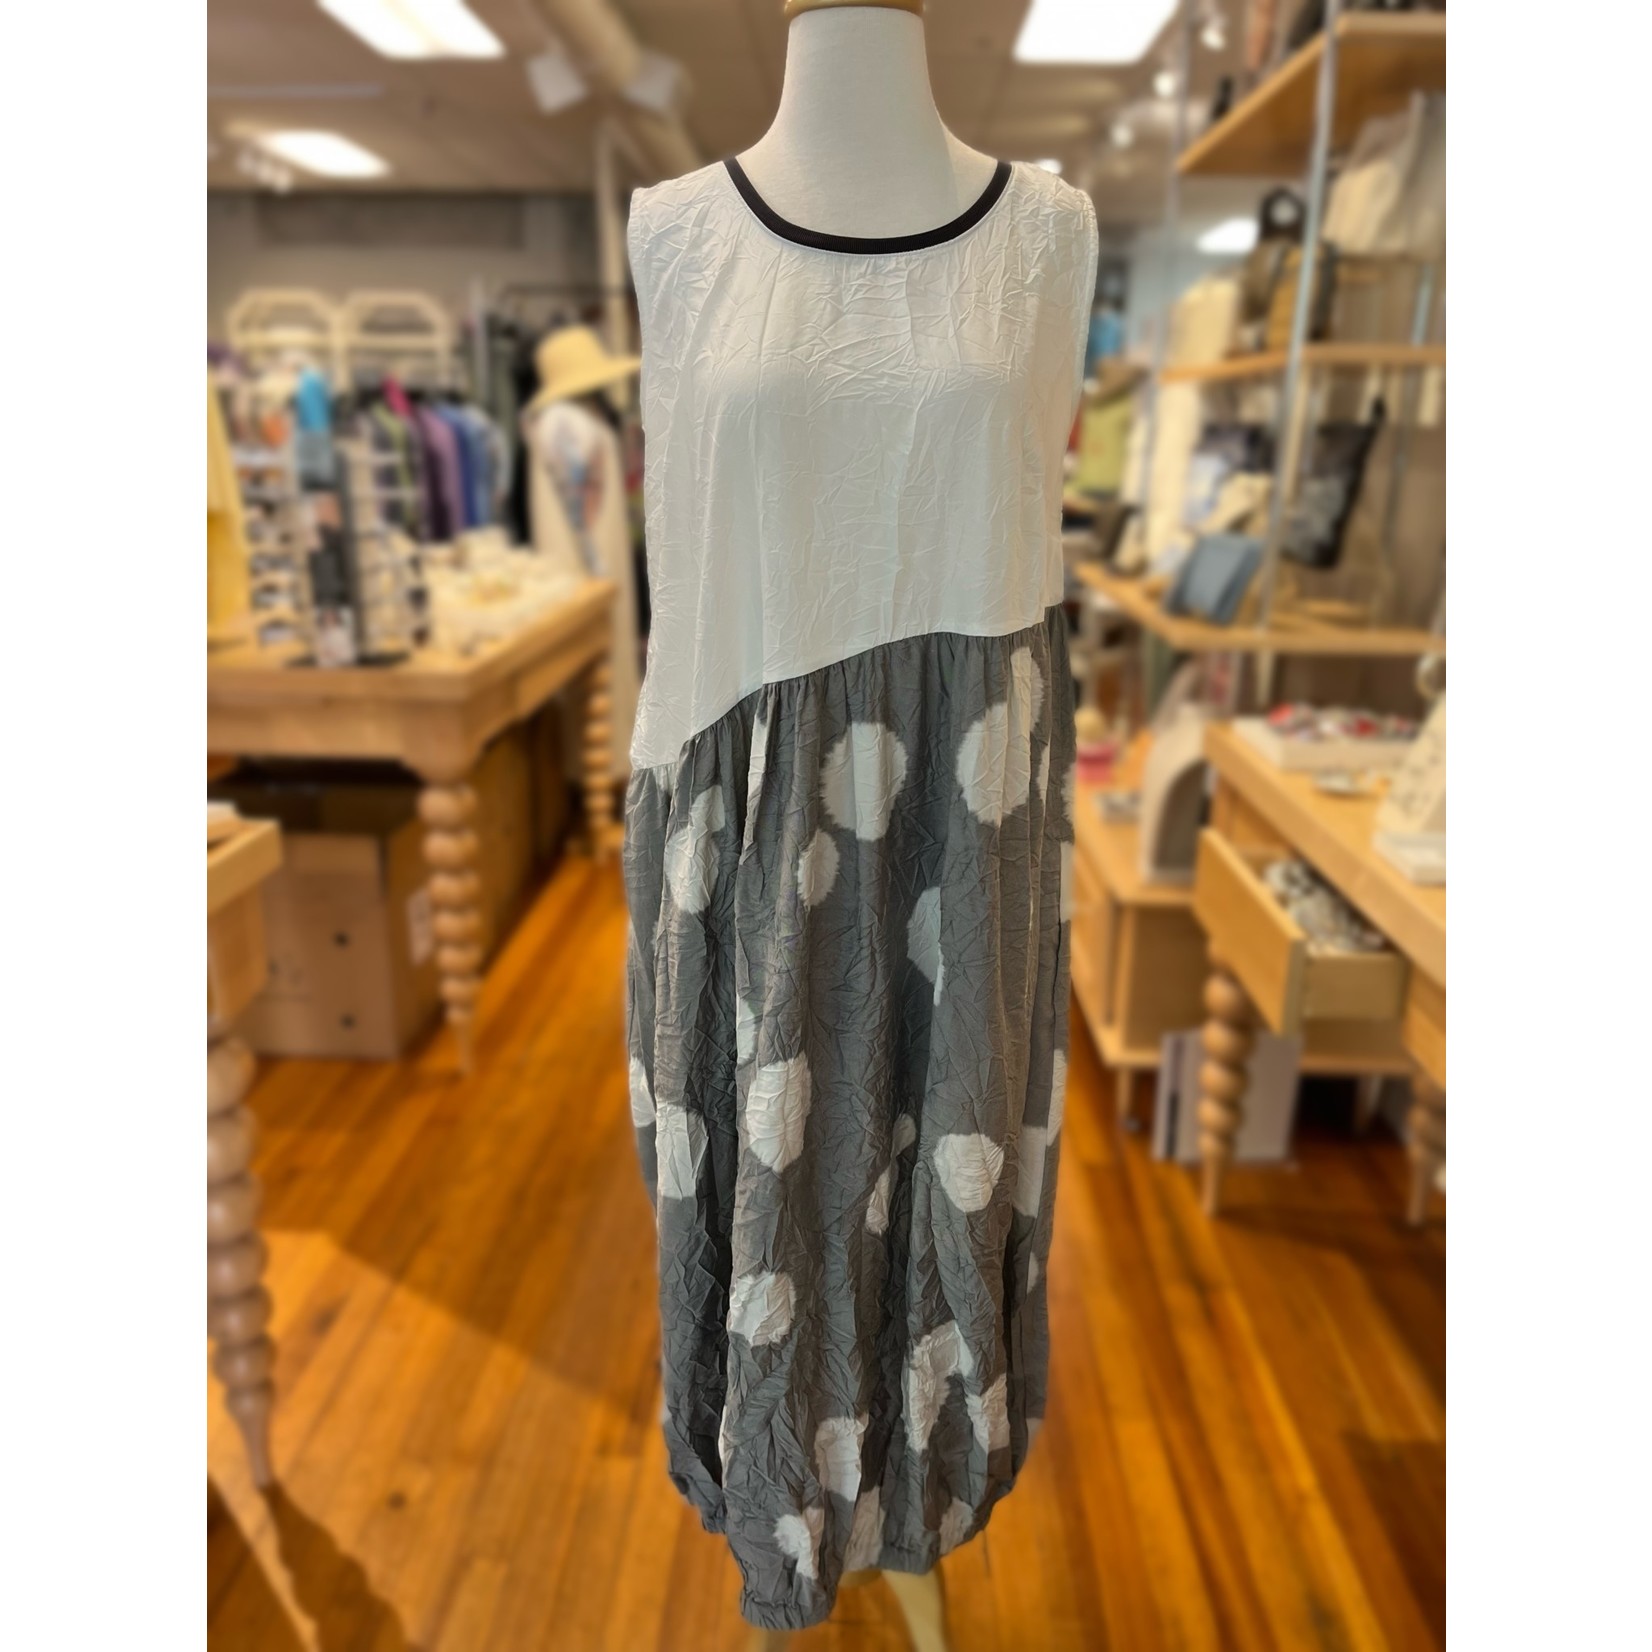 Ariela U-Neck Short Sleeve Dress In Grey & White Polka Dots